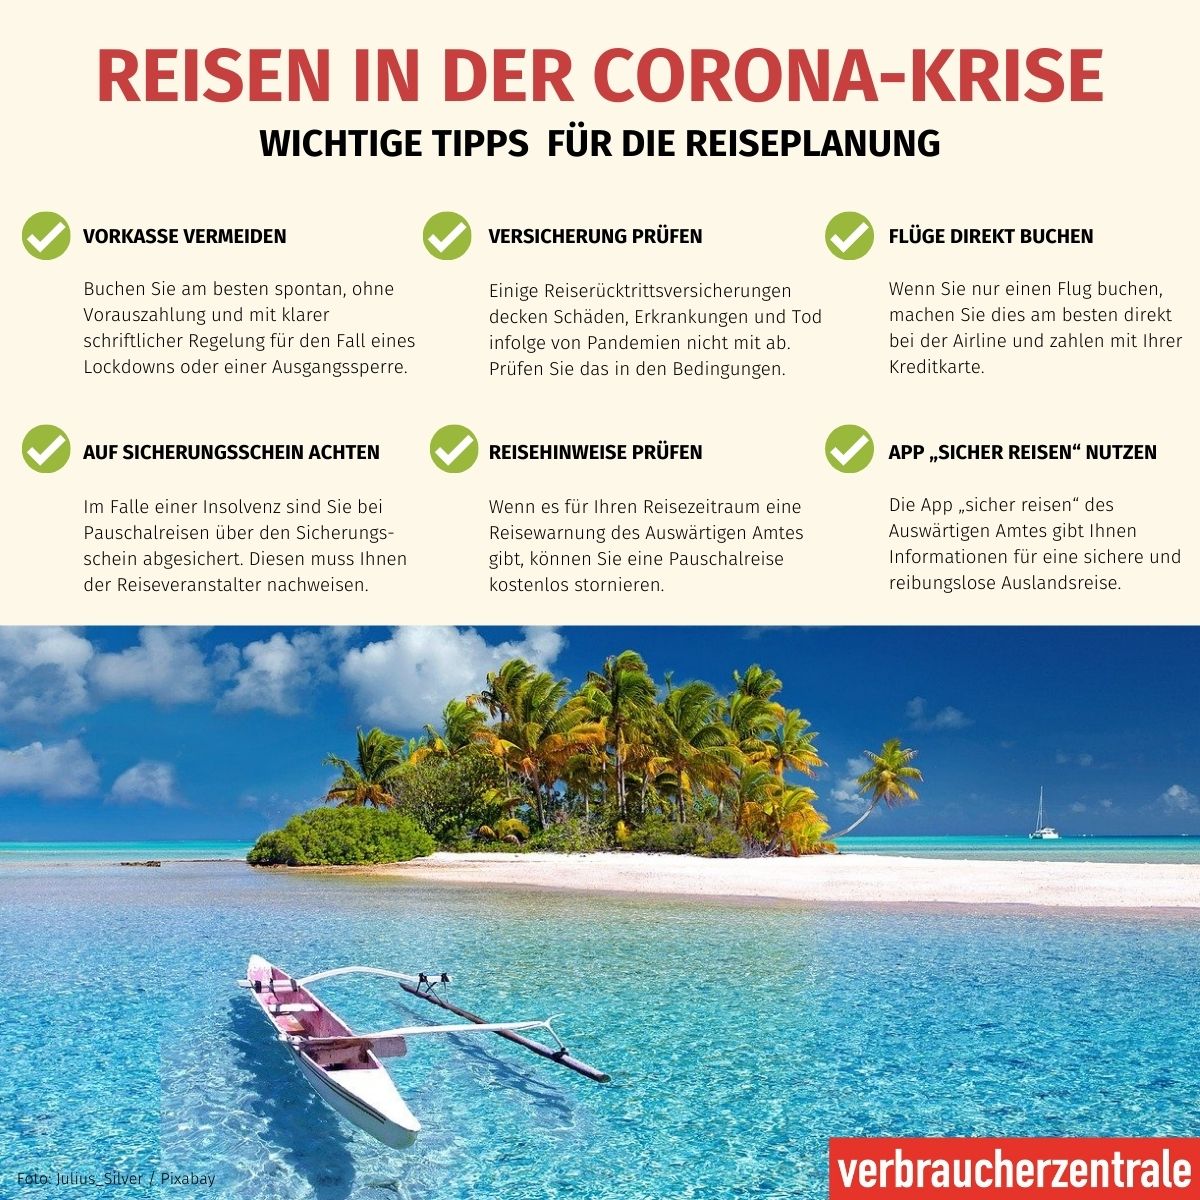 Reiseplanung in der Corona-Krise.